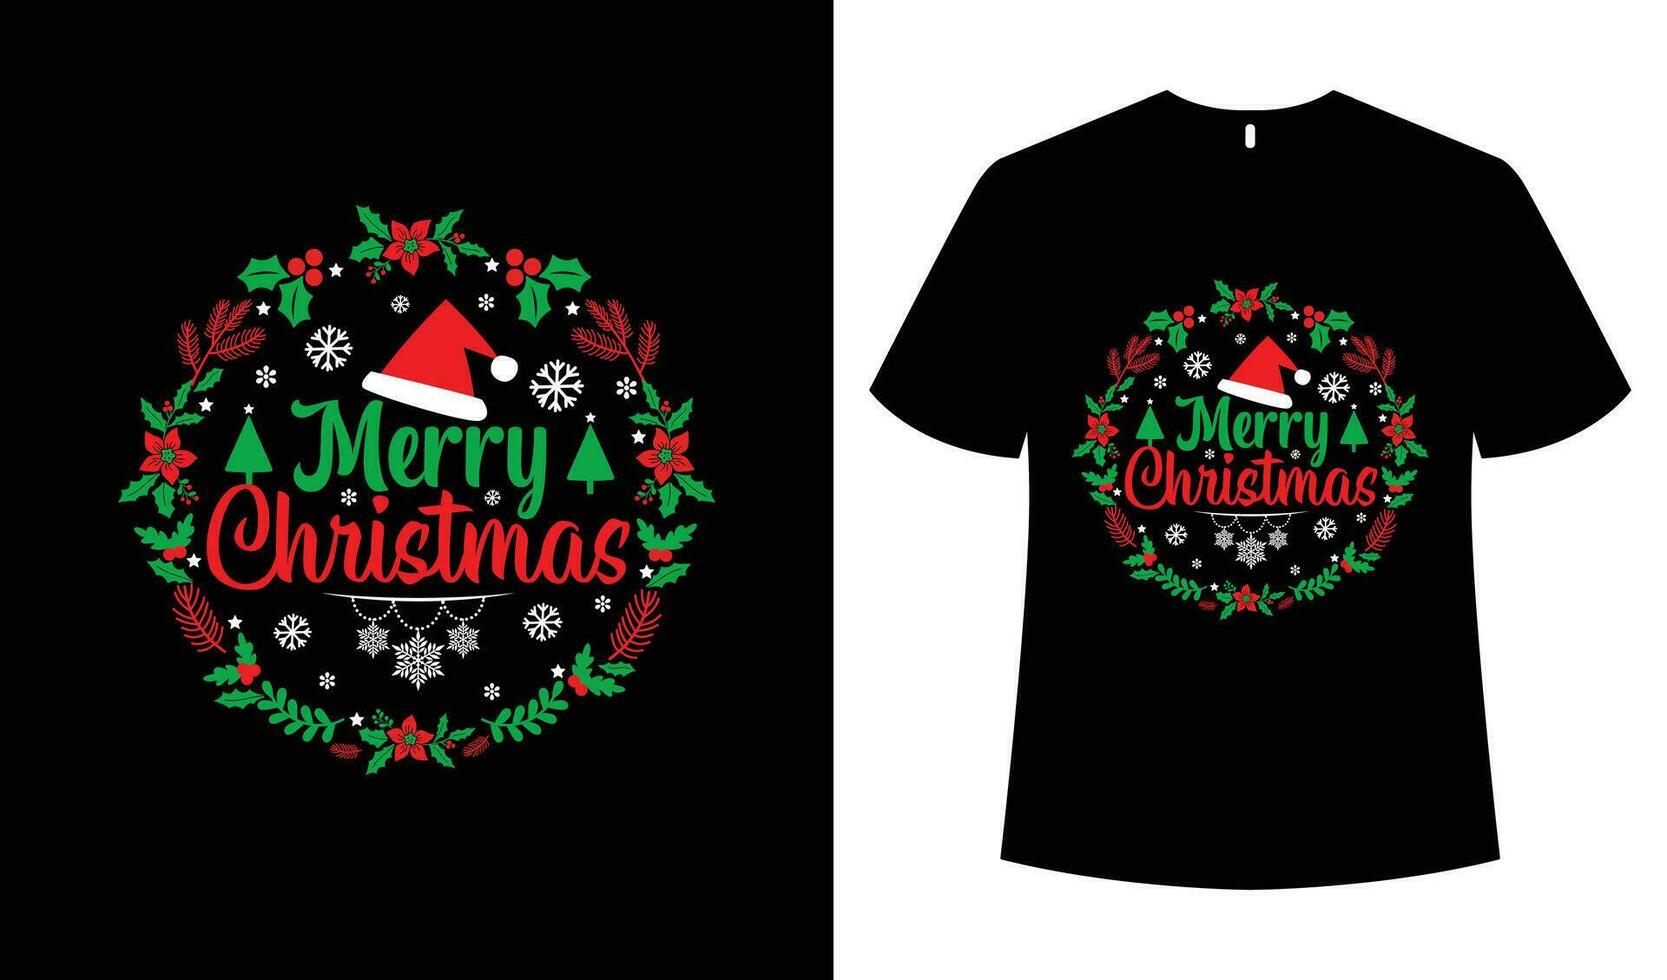 Marry Christmas t shirt designs template. Tshirt board vector